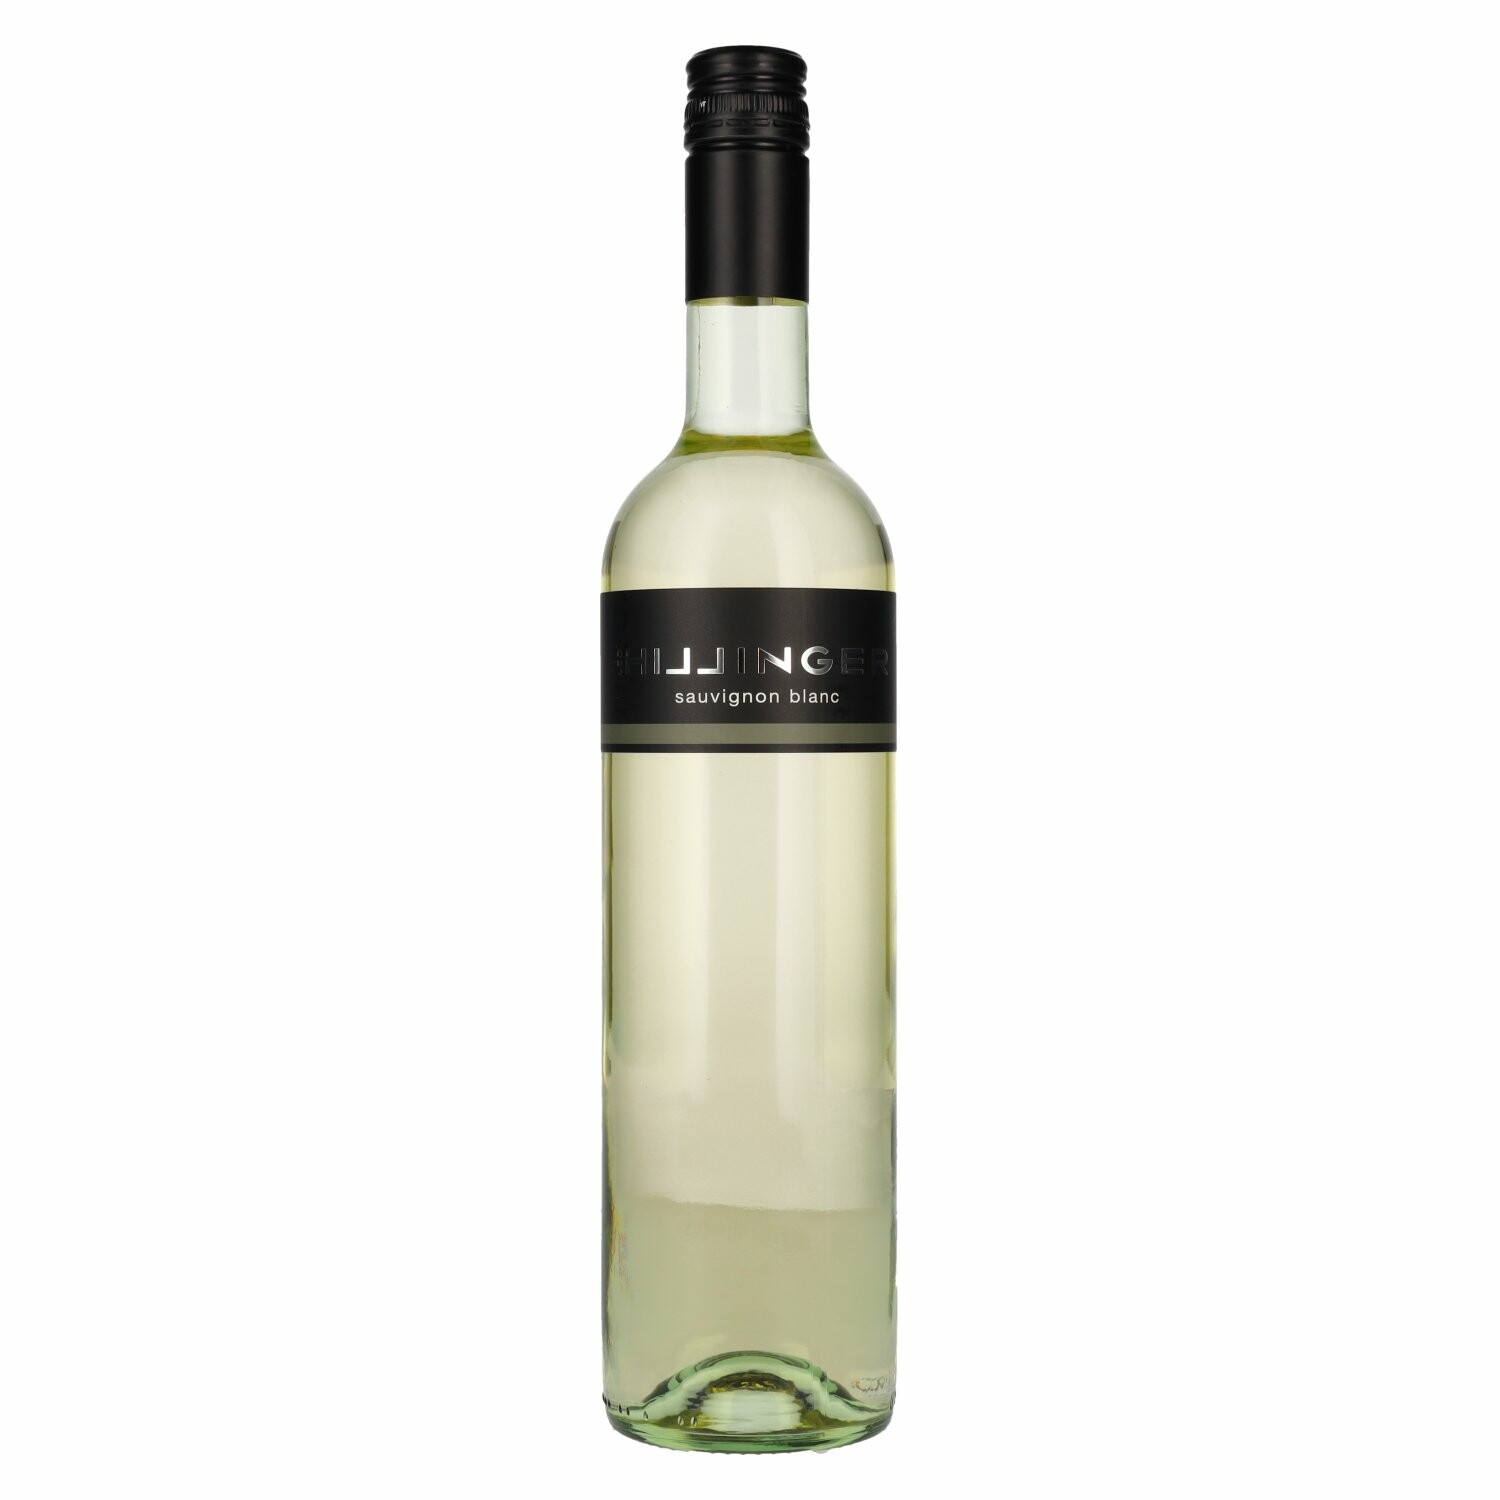 Hillinger Sauvignon Blanc 2021 13% Vol. 0,75l